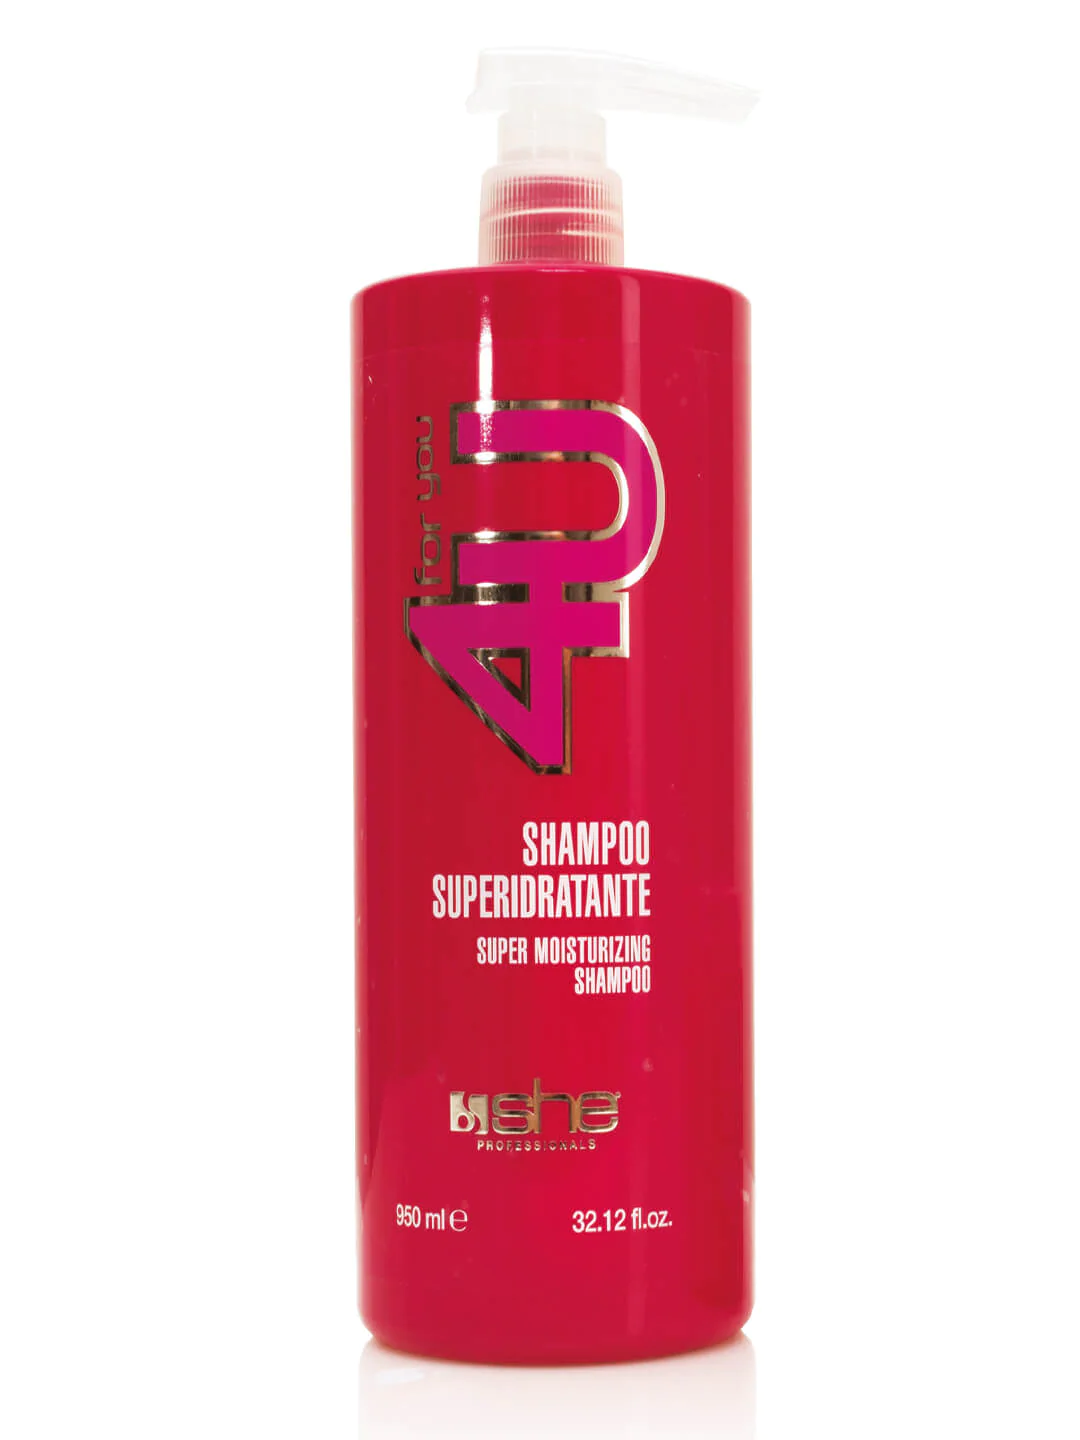 shampoo_4foryou_950ml_edda44d0-548e-4187-8422-a4b4307a4001